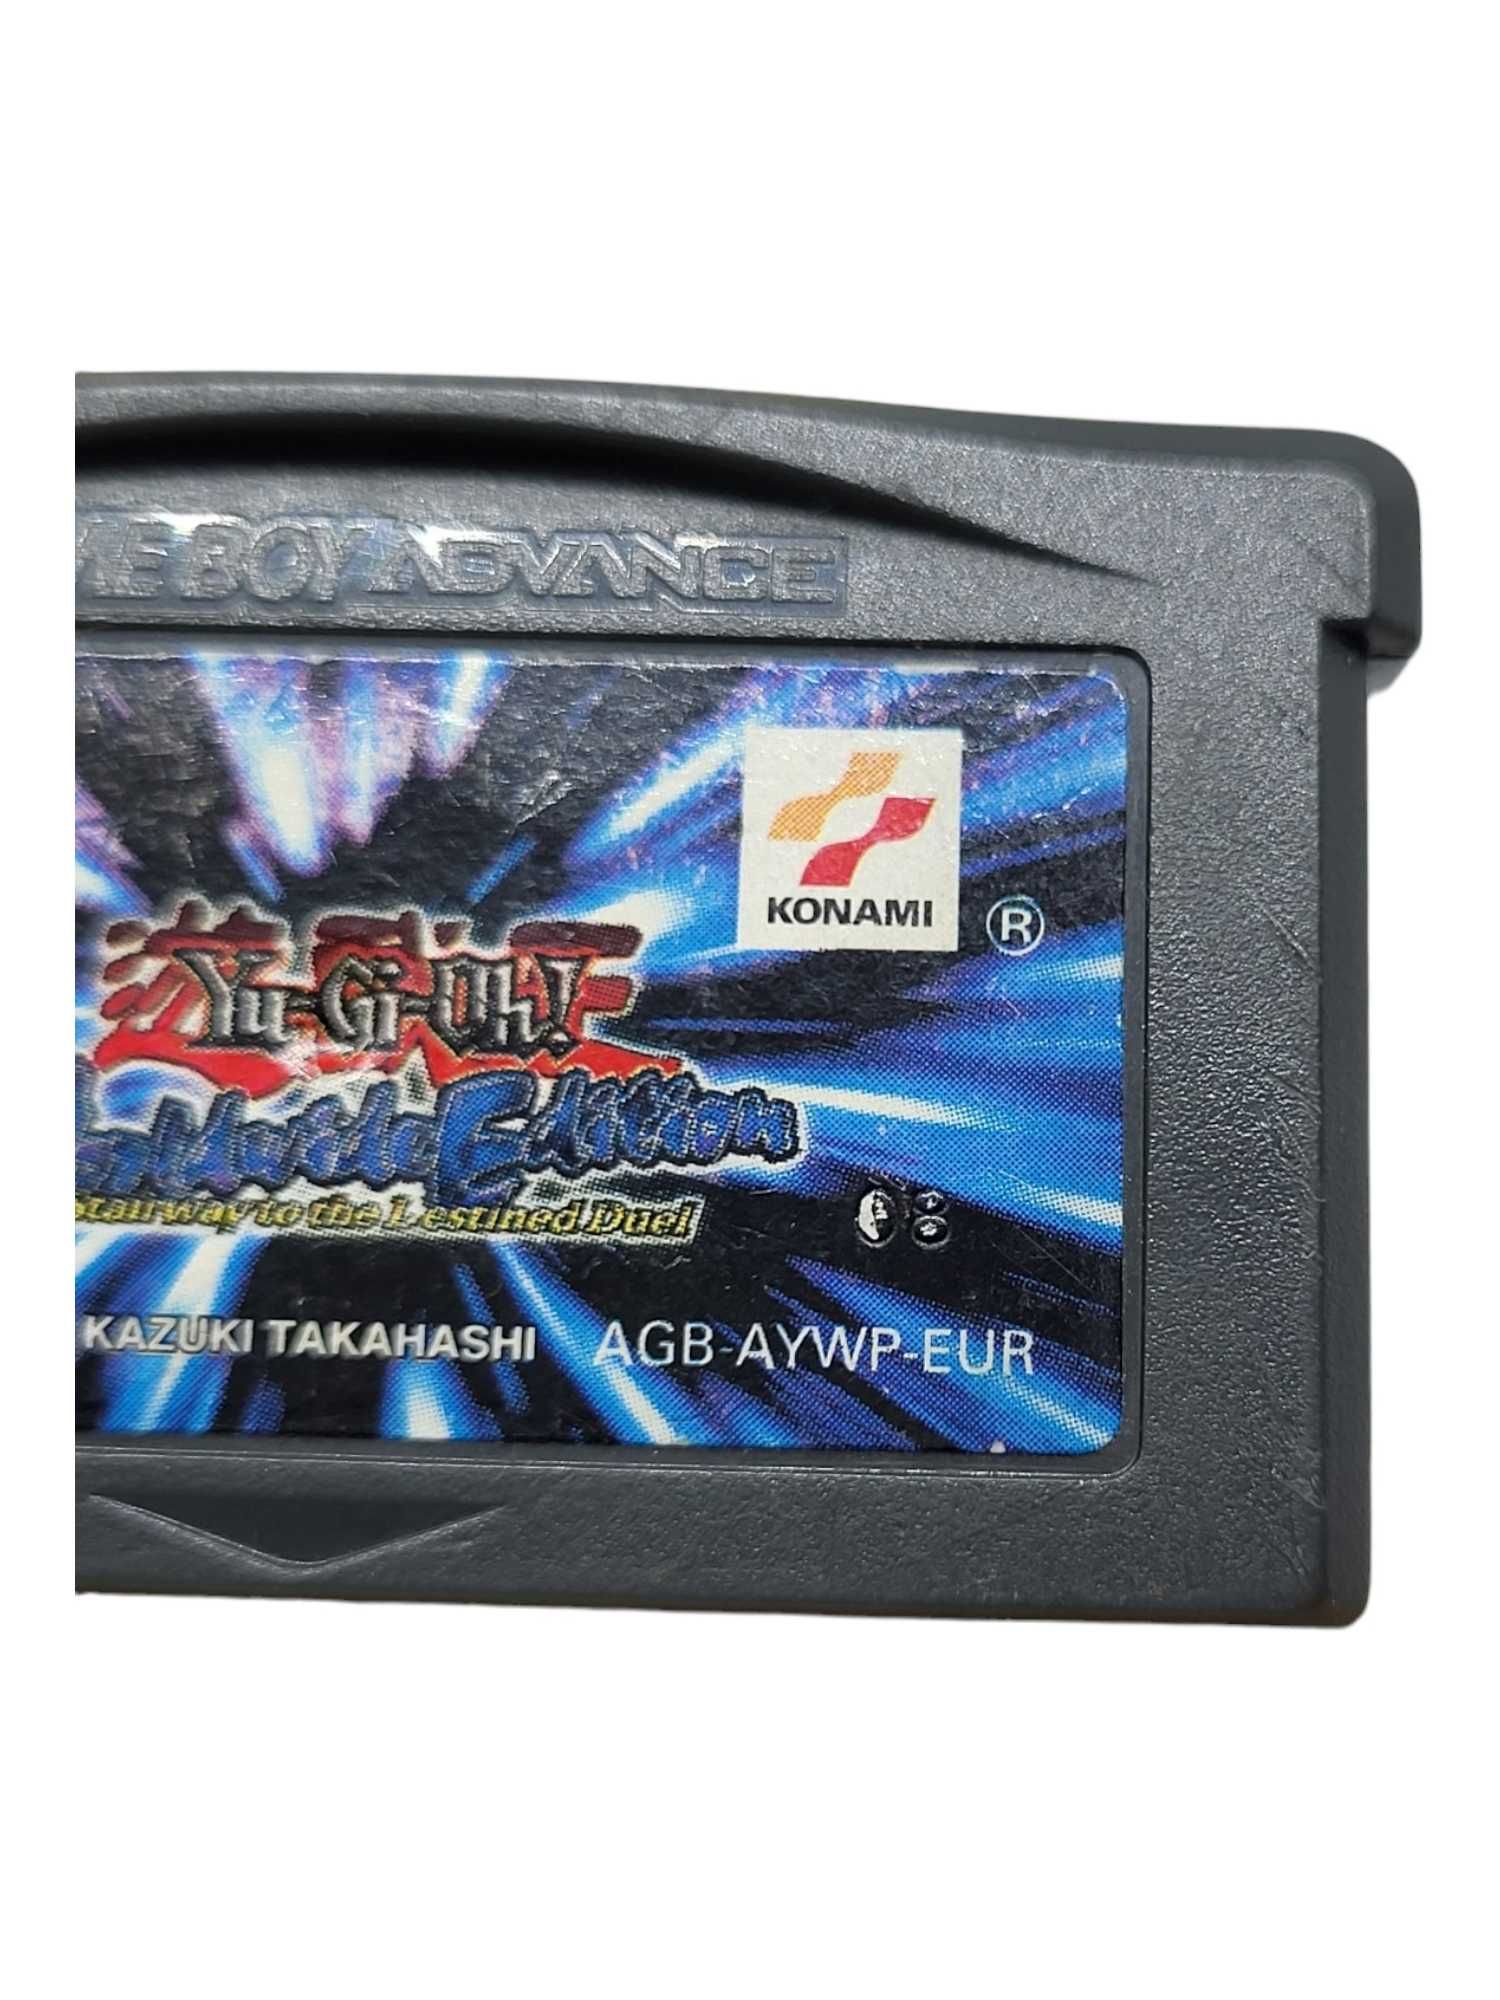 Yu-Gi-Oh Game Boy Gameboy Advance GBA